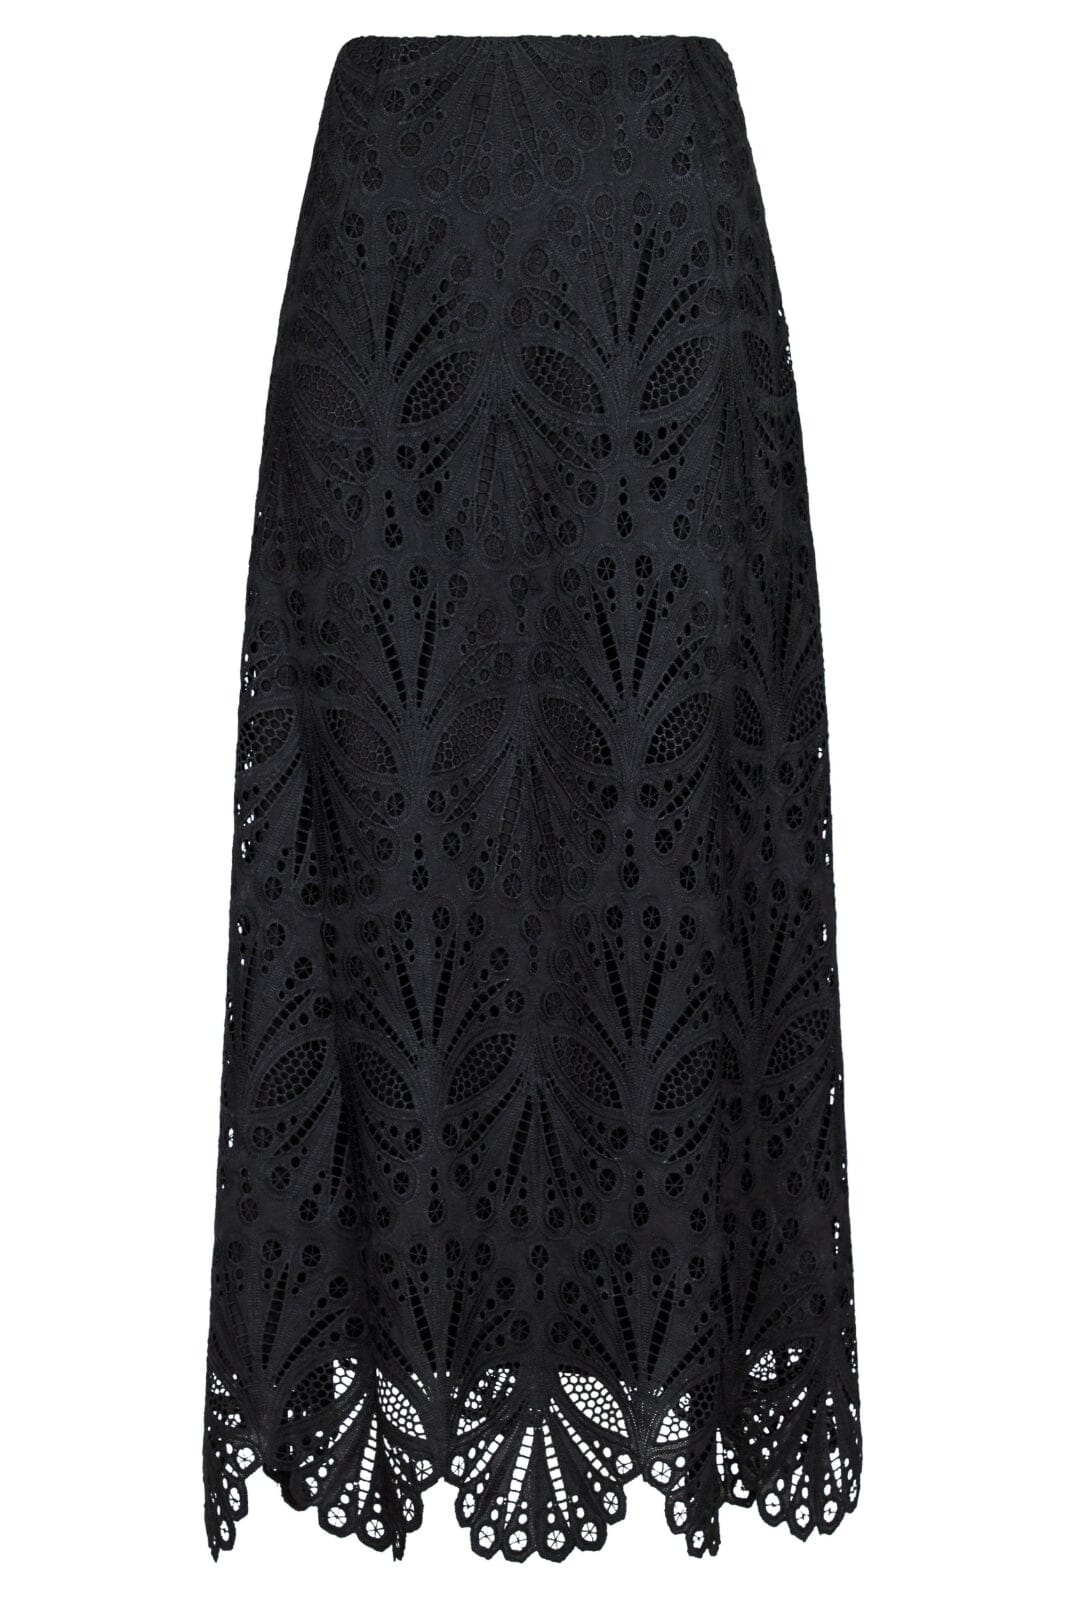 Neo Noir - Daia Embroidery Skirt - Black 